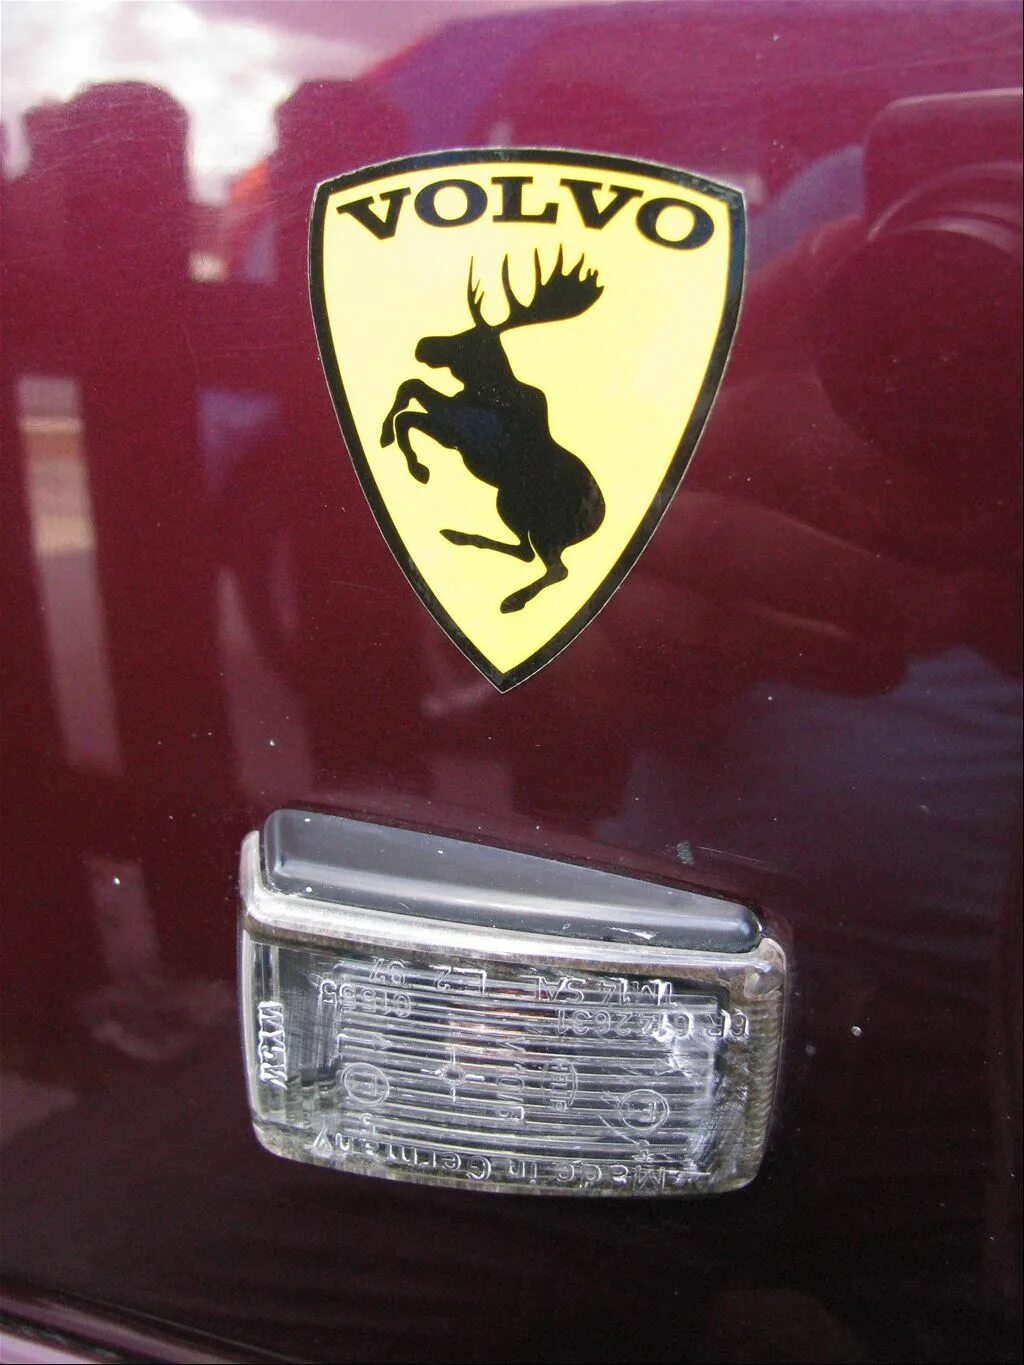 Вольво лось. Volvo значок Лось. Вольво 940 шильдик Лось на машине. Volvo олень. Значок Volvo с оленем.